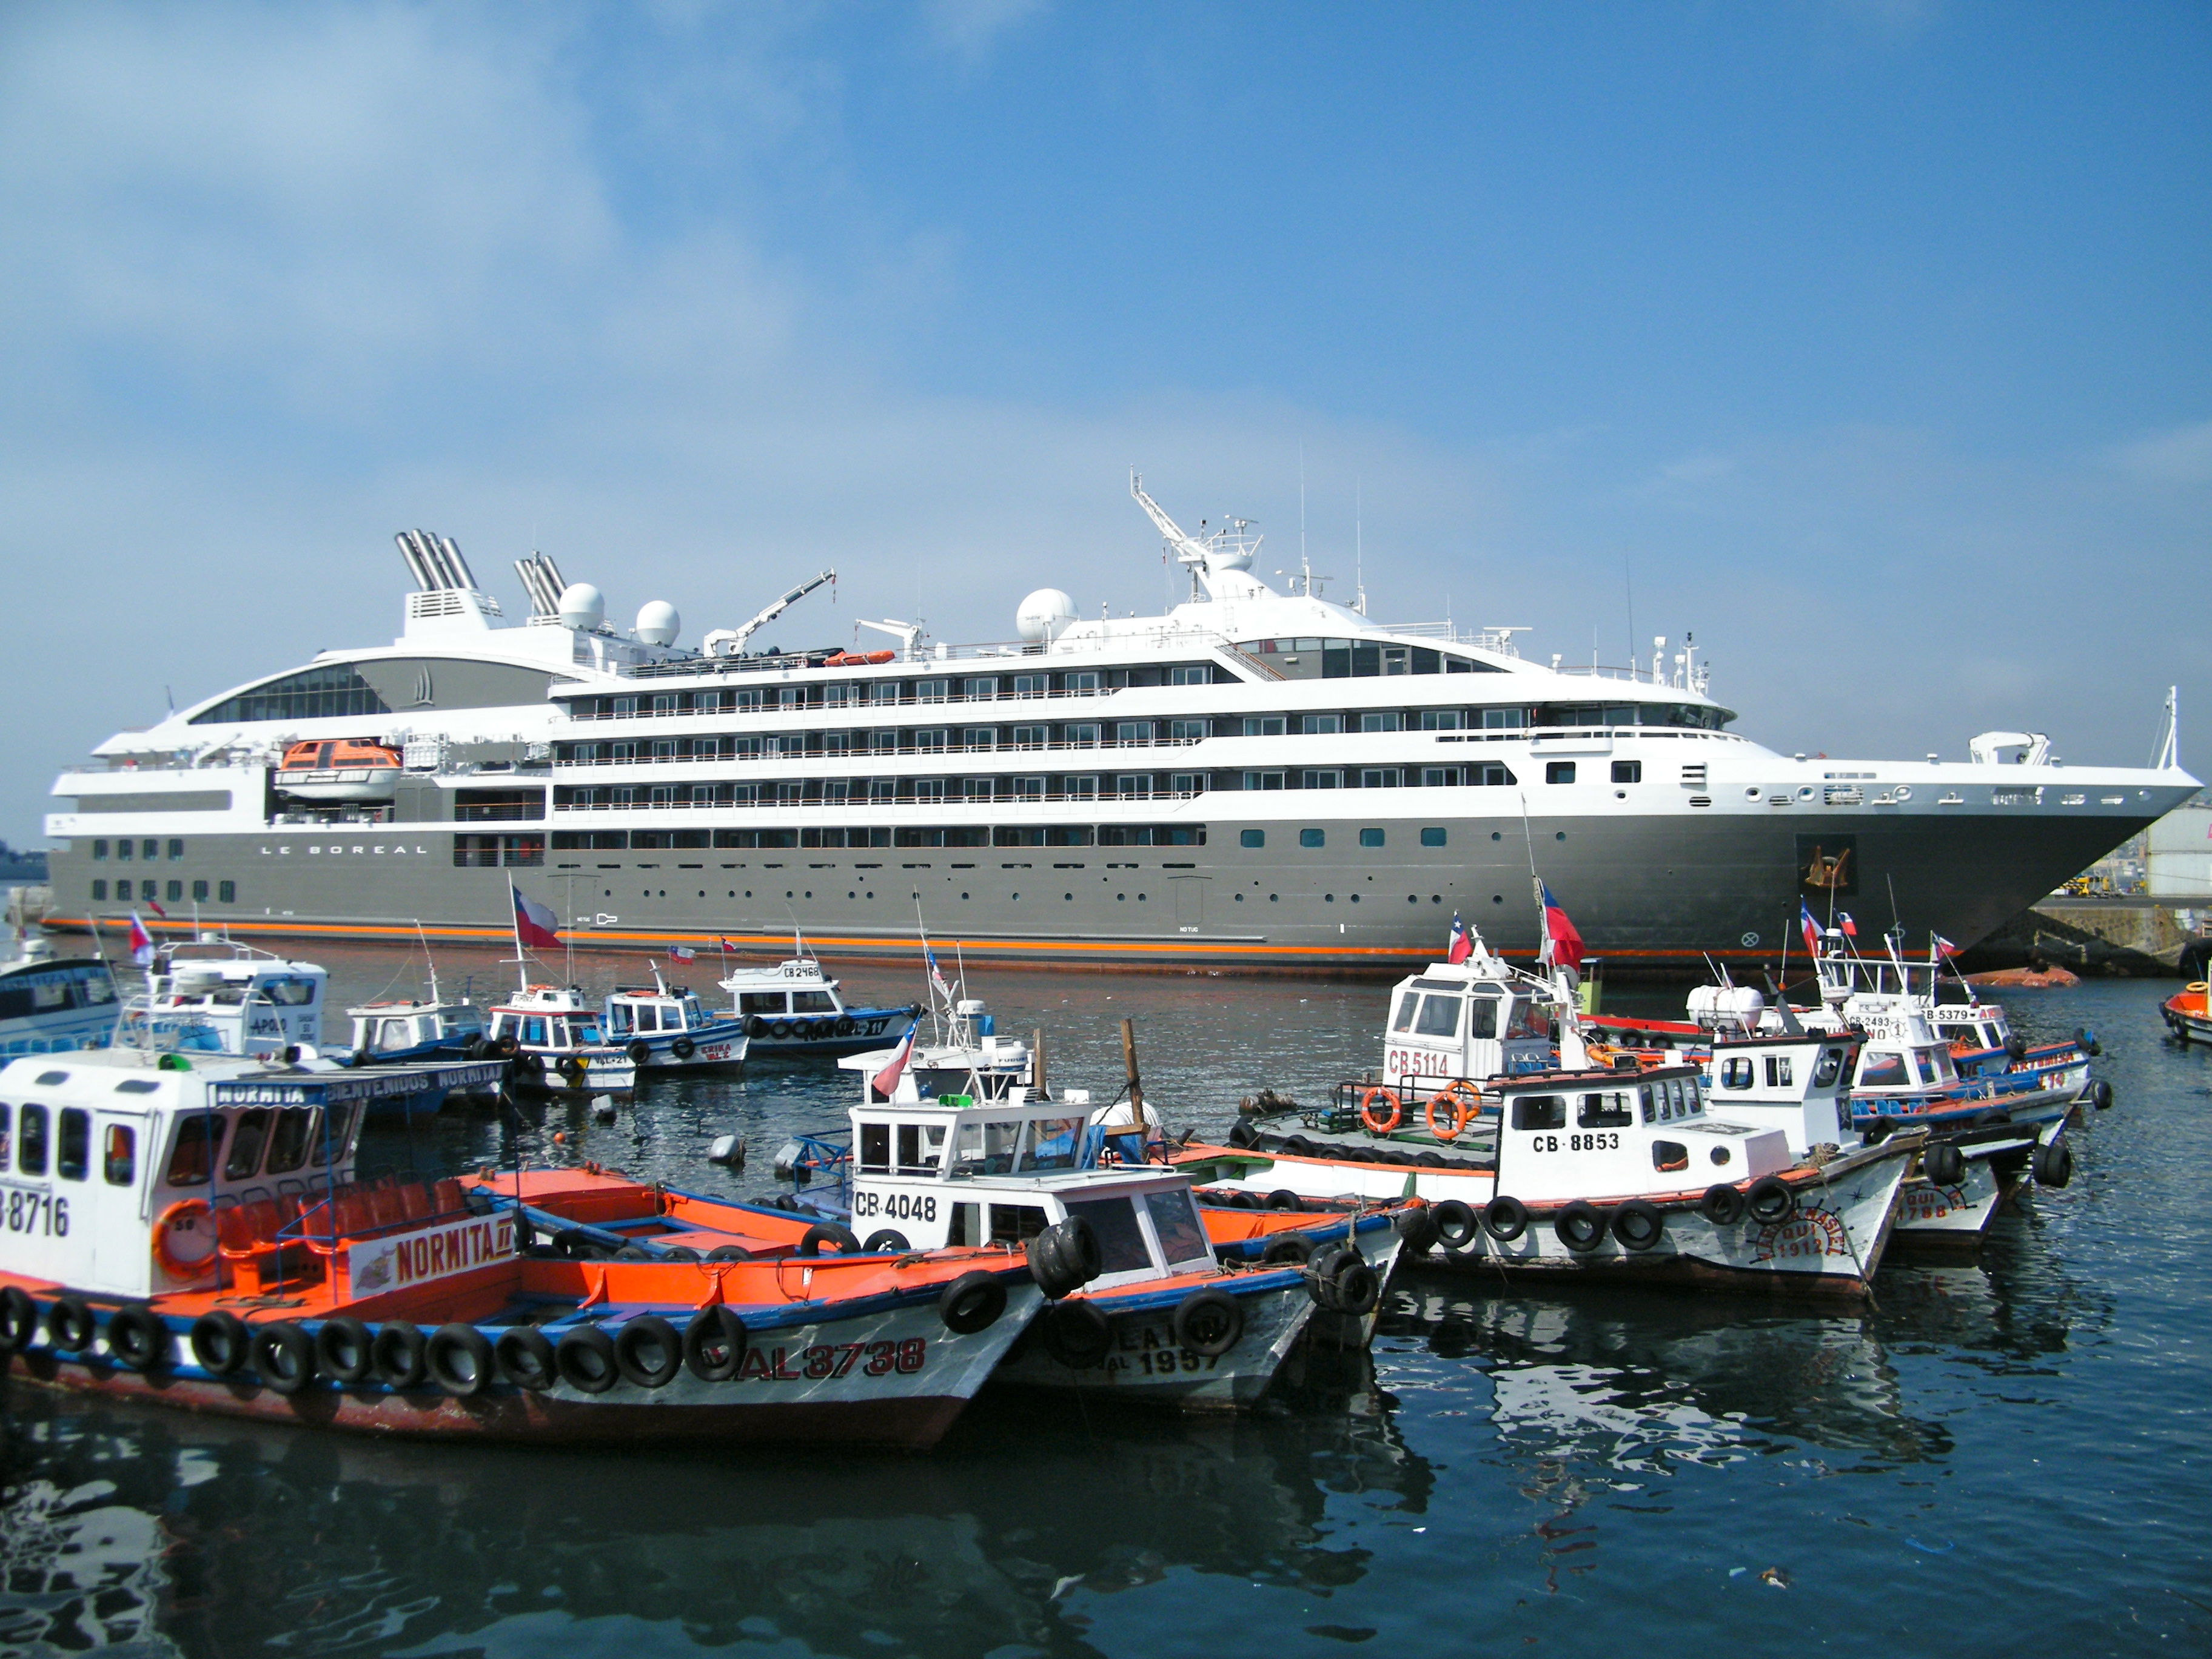 File:Cruise ship at port of Valparaiso - Stierch.JPG - Wikimedia Commons